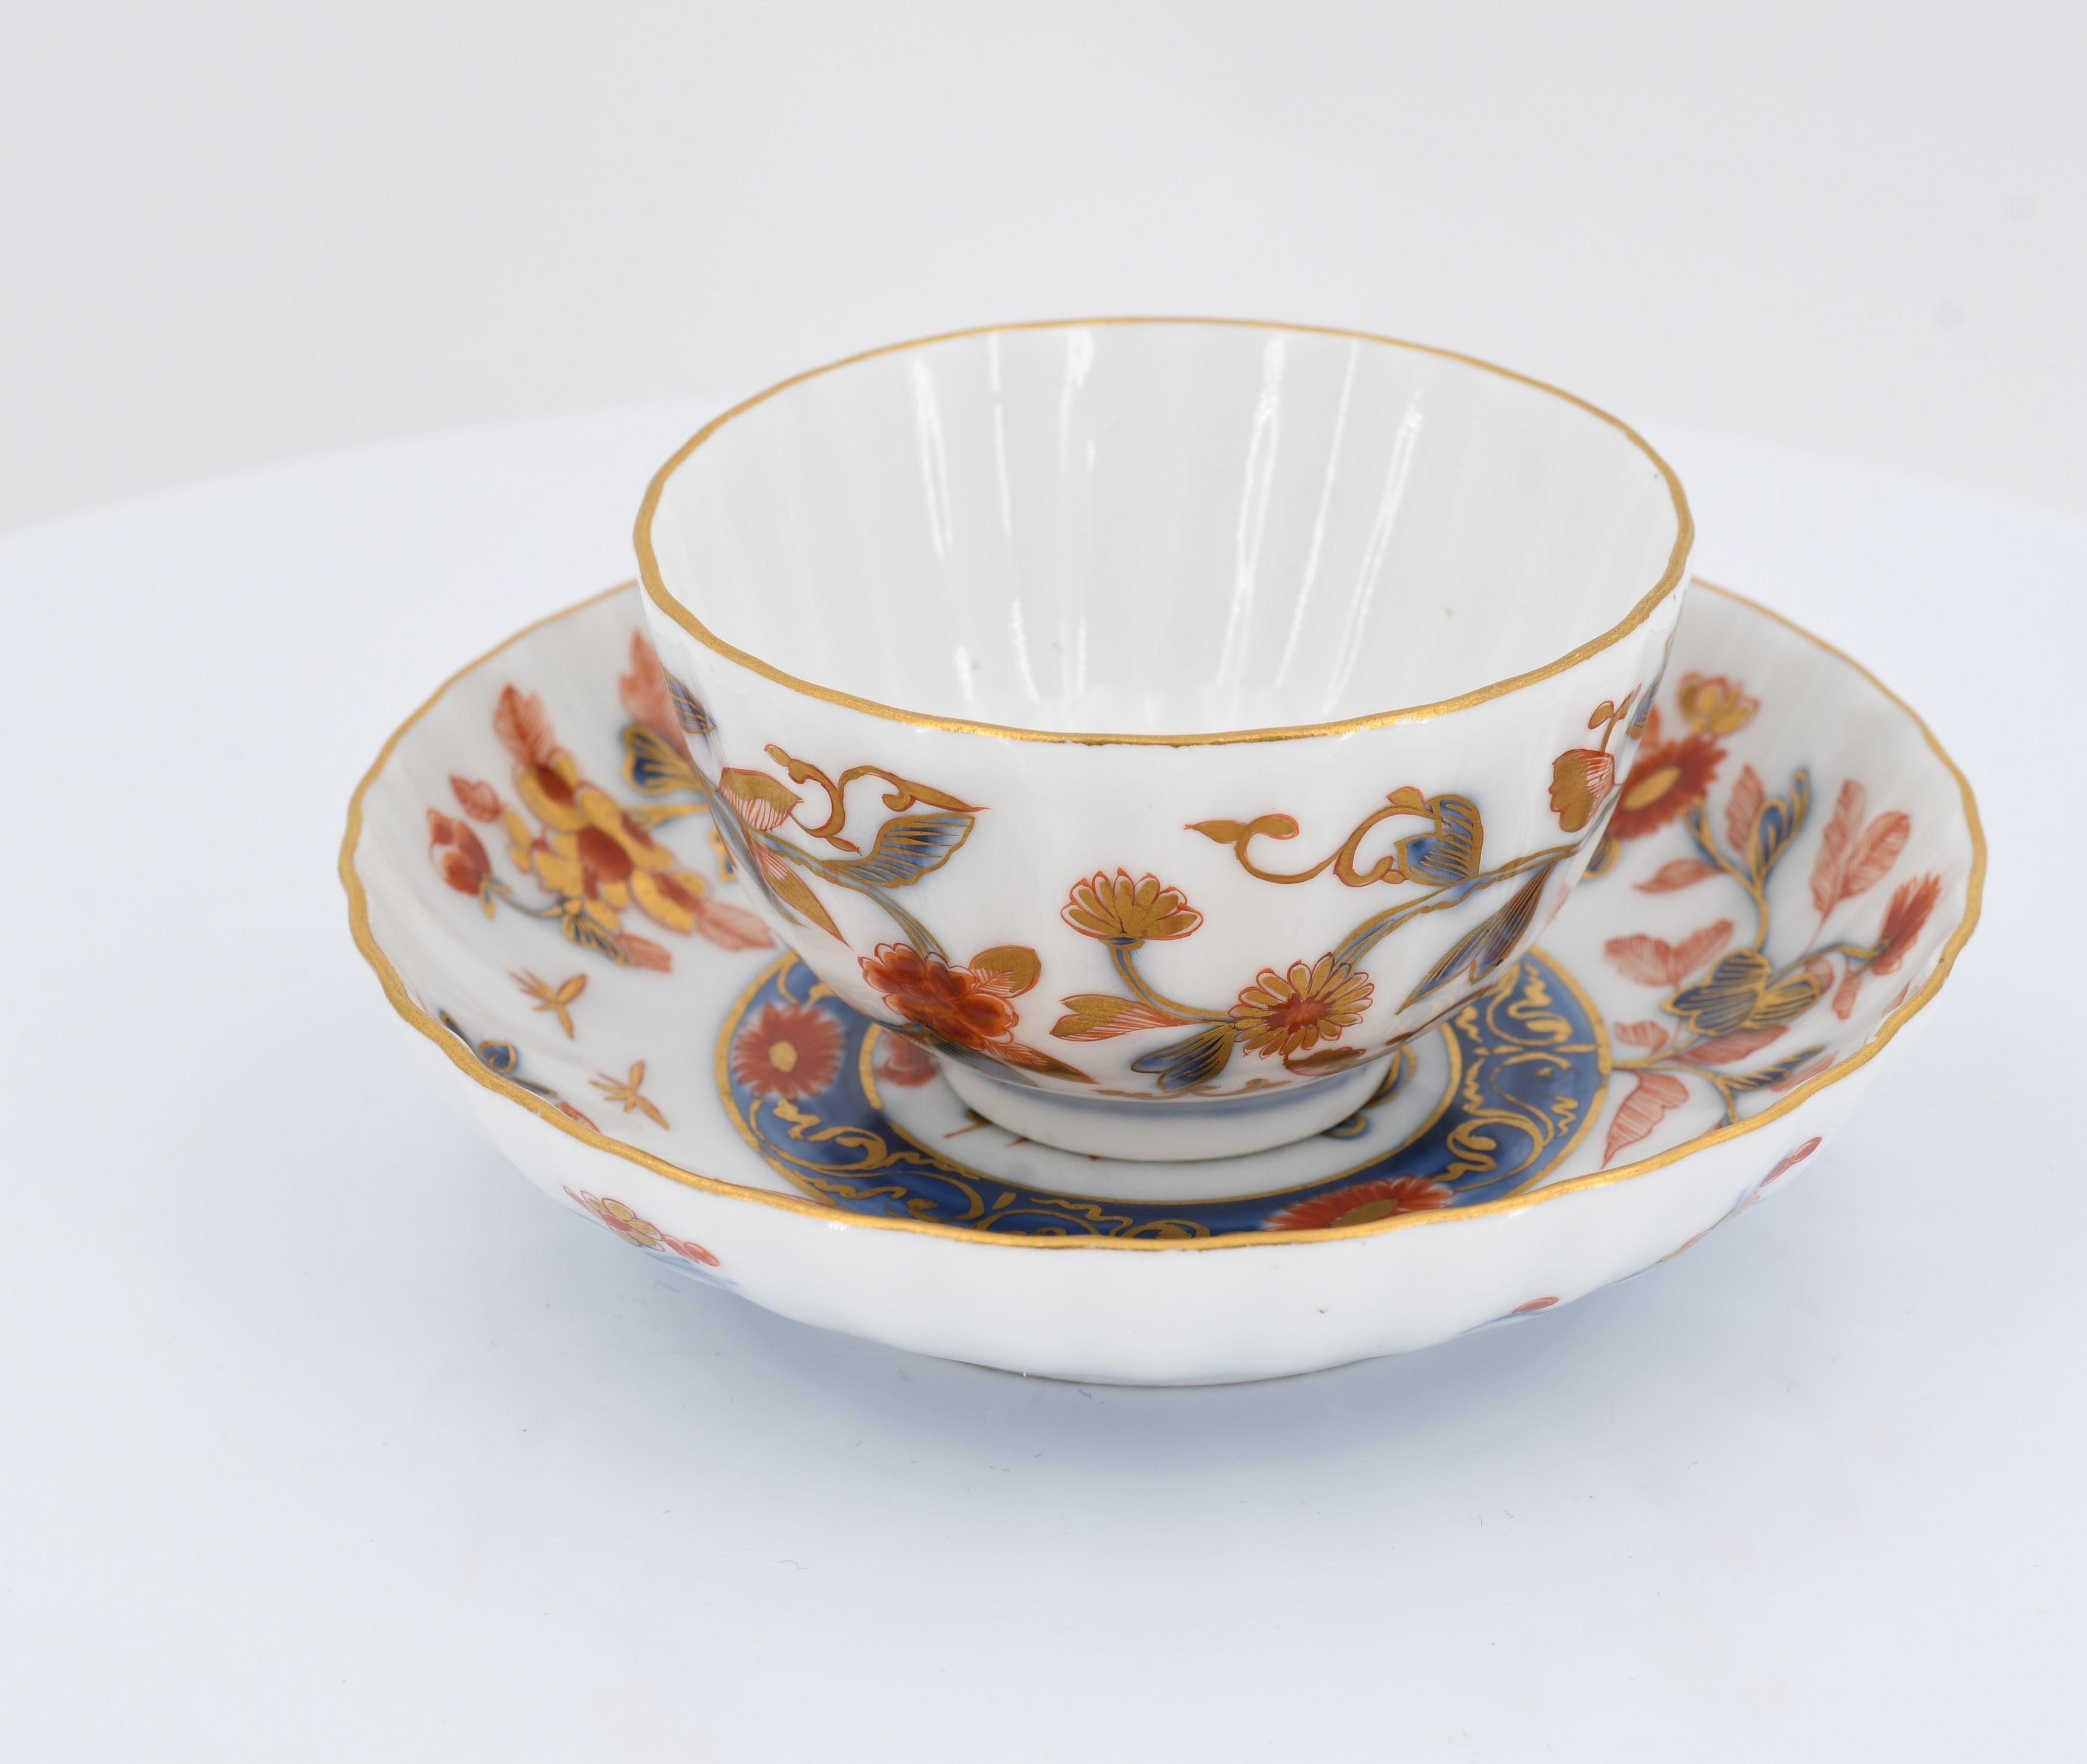 Tea bowl and saucer with Imari décor - Image 5 of 7